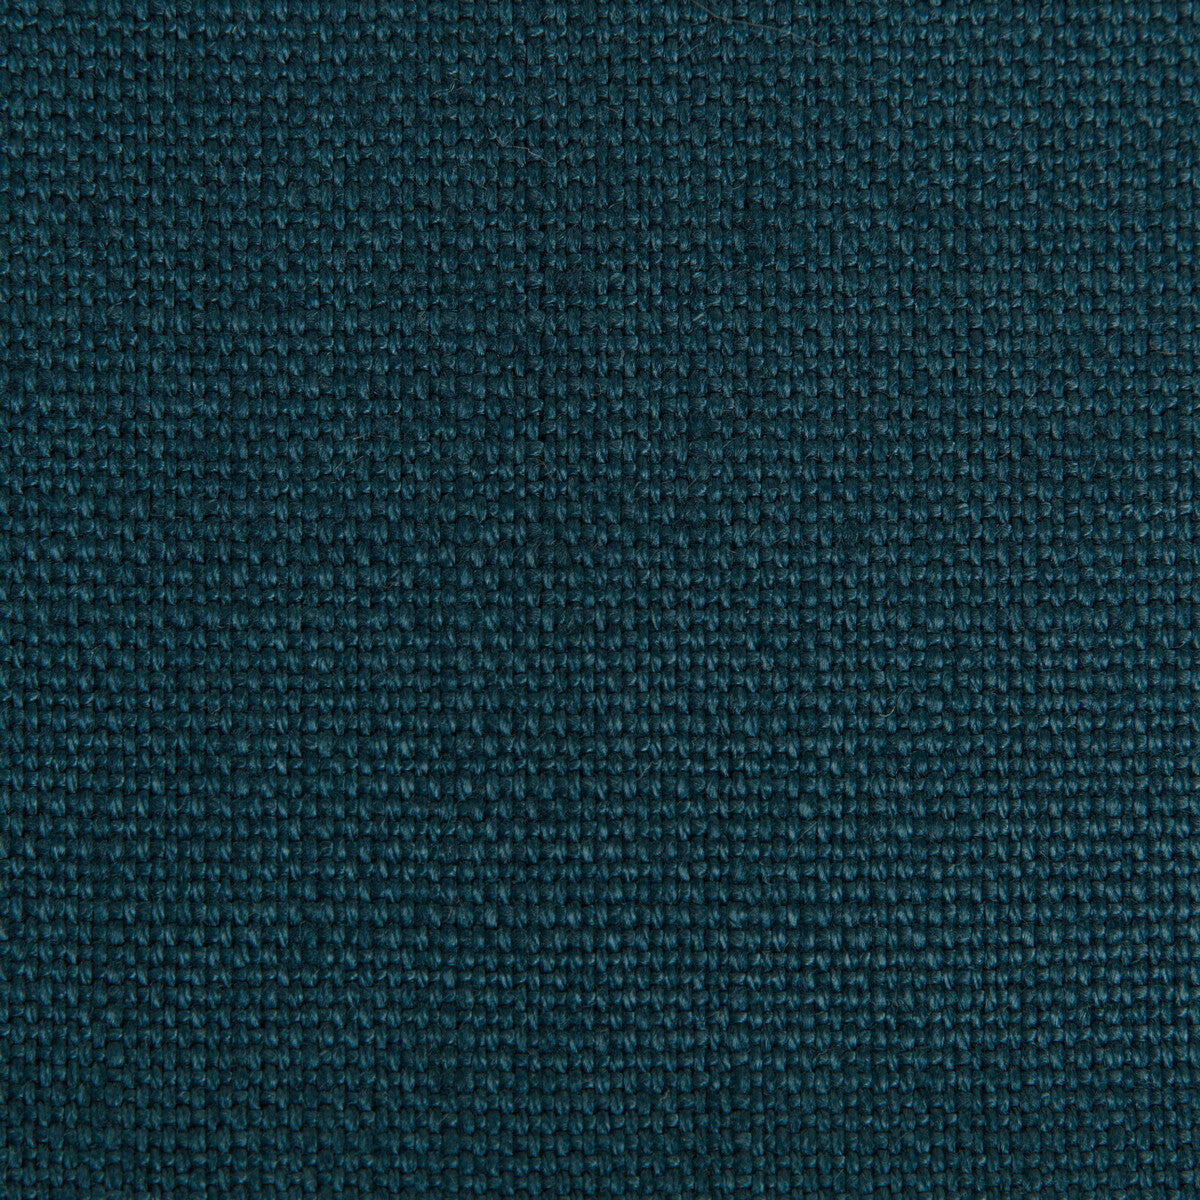 Stone Harbor fabric in slate color - pattern 27591.515.0 - by Kravet Basics